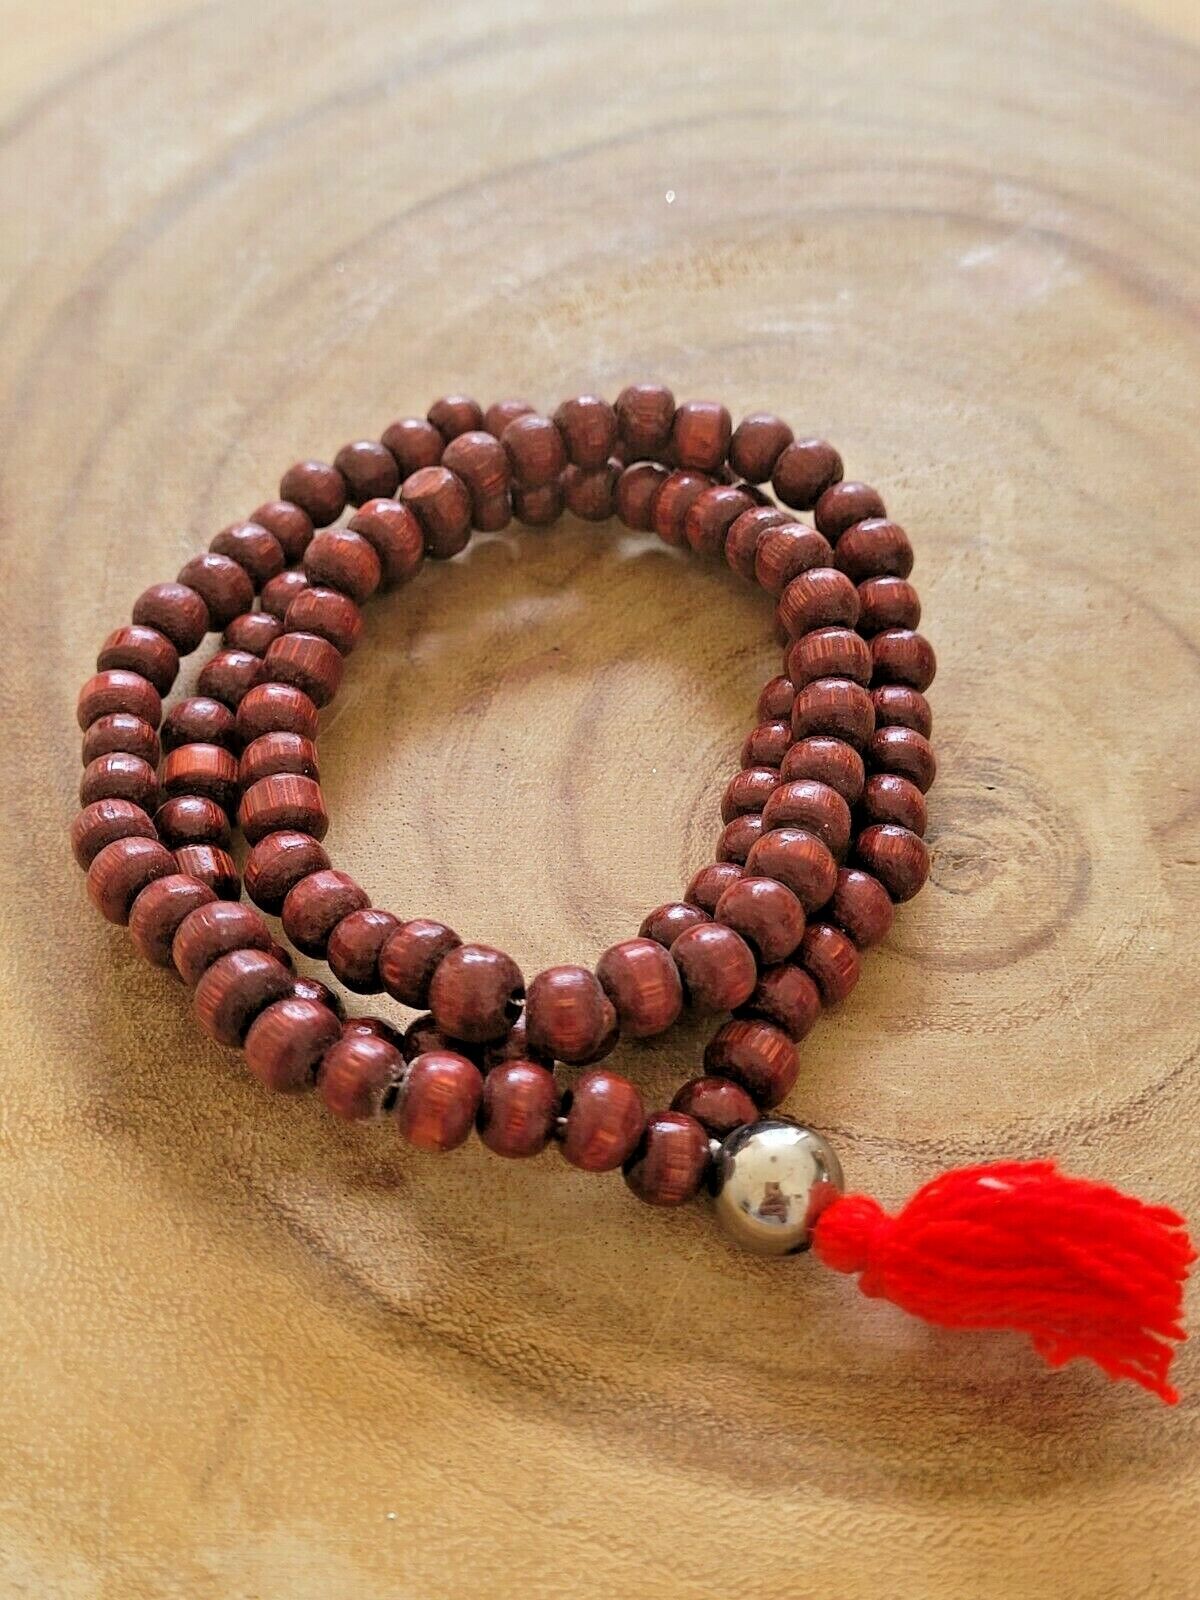 Cherry Sandalwood 108 8mm Buddhist Prayer Wood Bead Mala Necklace Bracelet